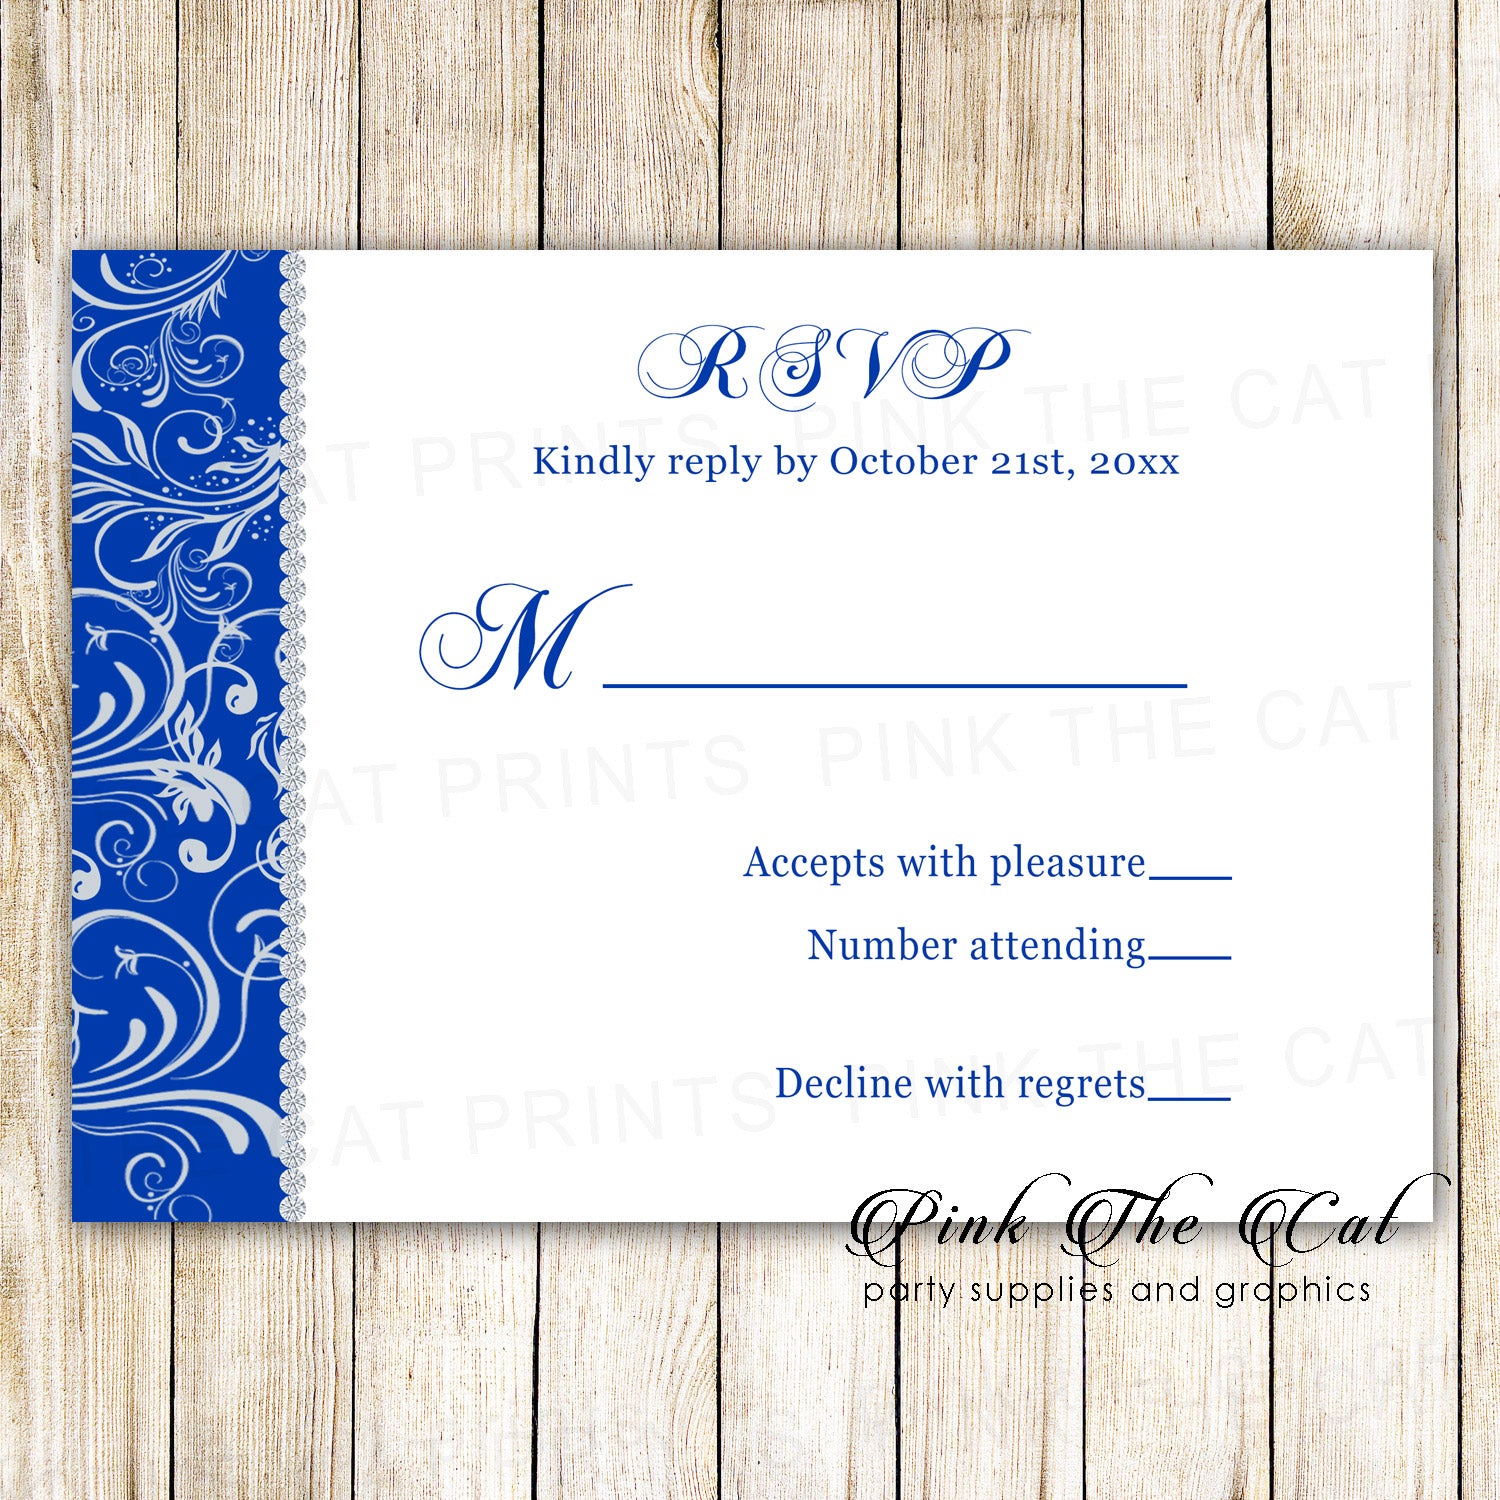 100 wedding invitations rhinestone royal blue diamonds & rsvp